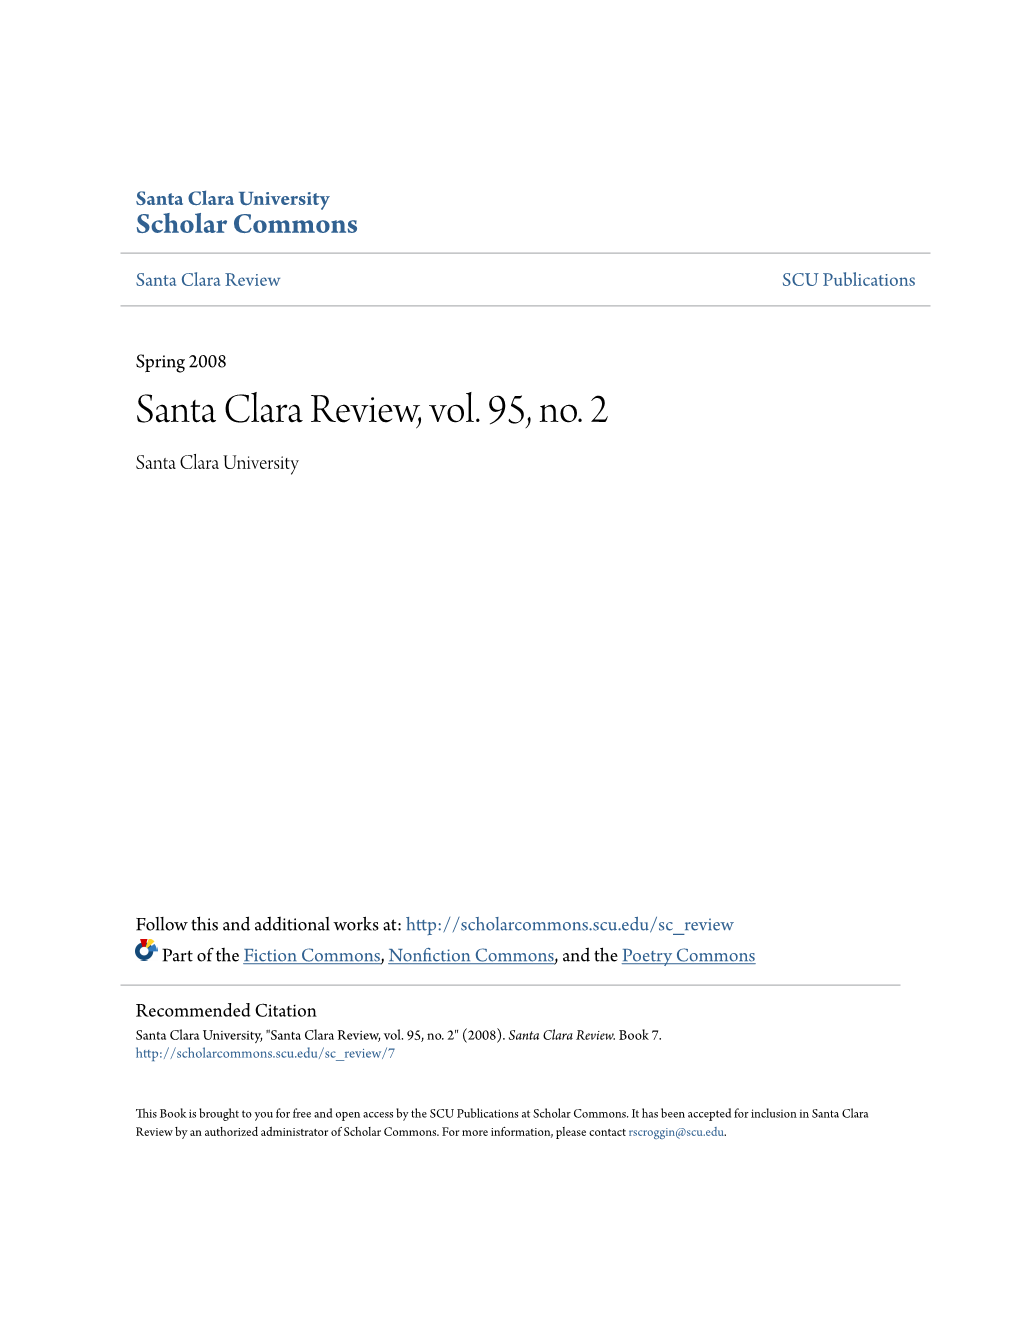 Santa Clara Review, Vol. 95, No. 2 Santa Clara University